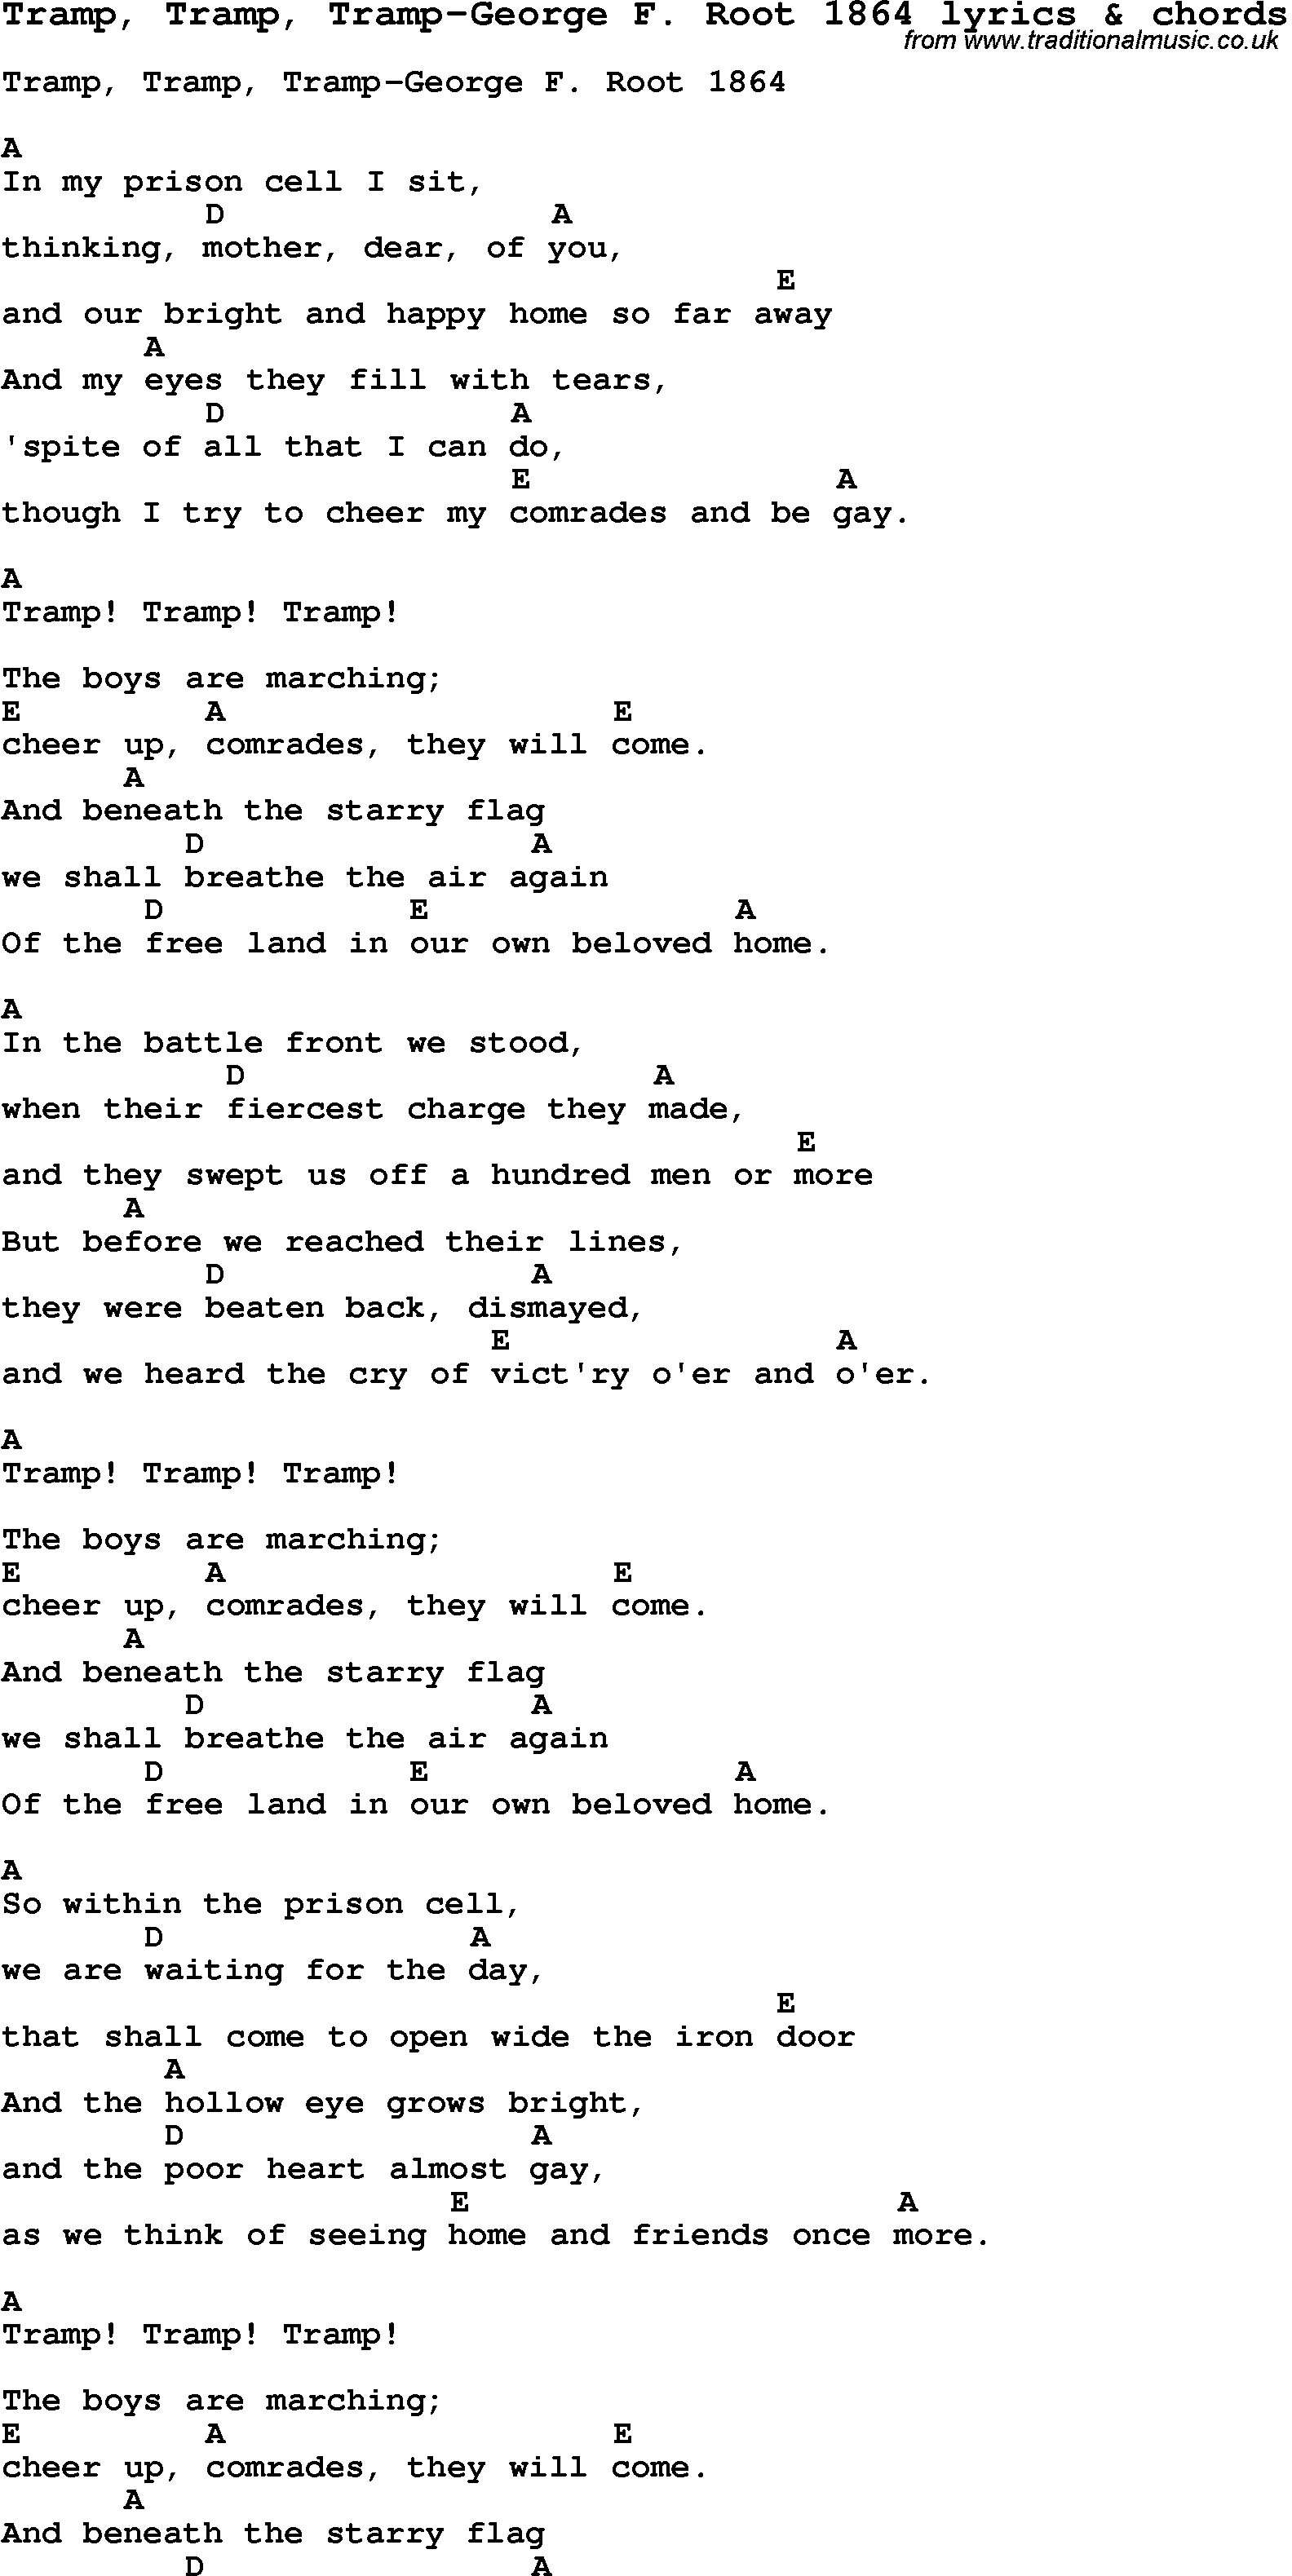 Love Song Lyrics for: Tramp, Tramp, Tramp-George F. Root 1864 with chords for Ukulele, Guitar Banjo etc.